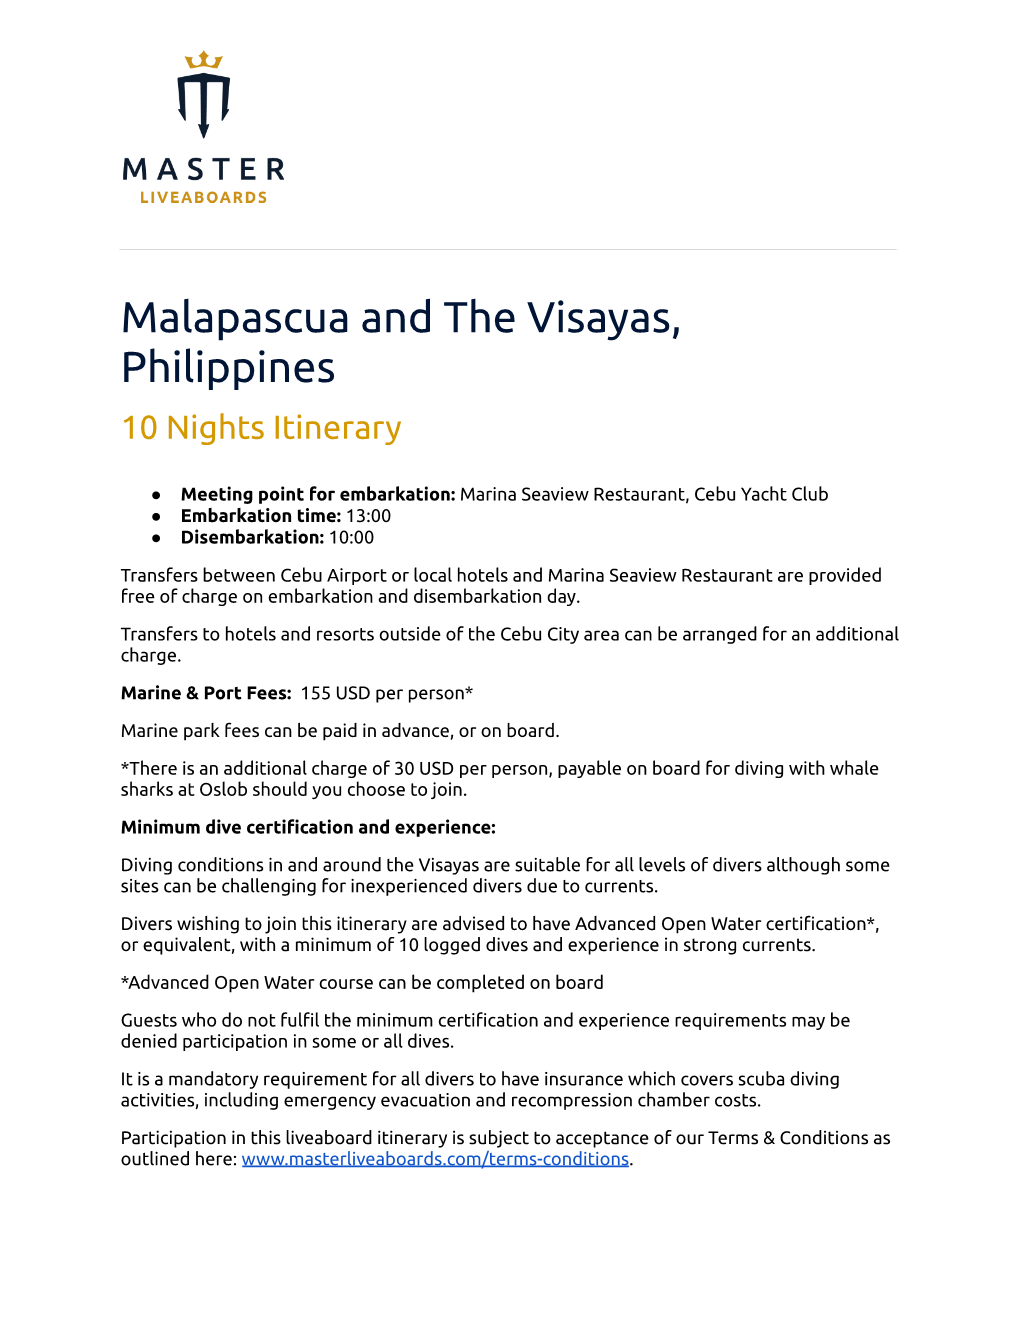 Malapascua and the Visayas, Philippines 10 Nights Itinerary